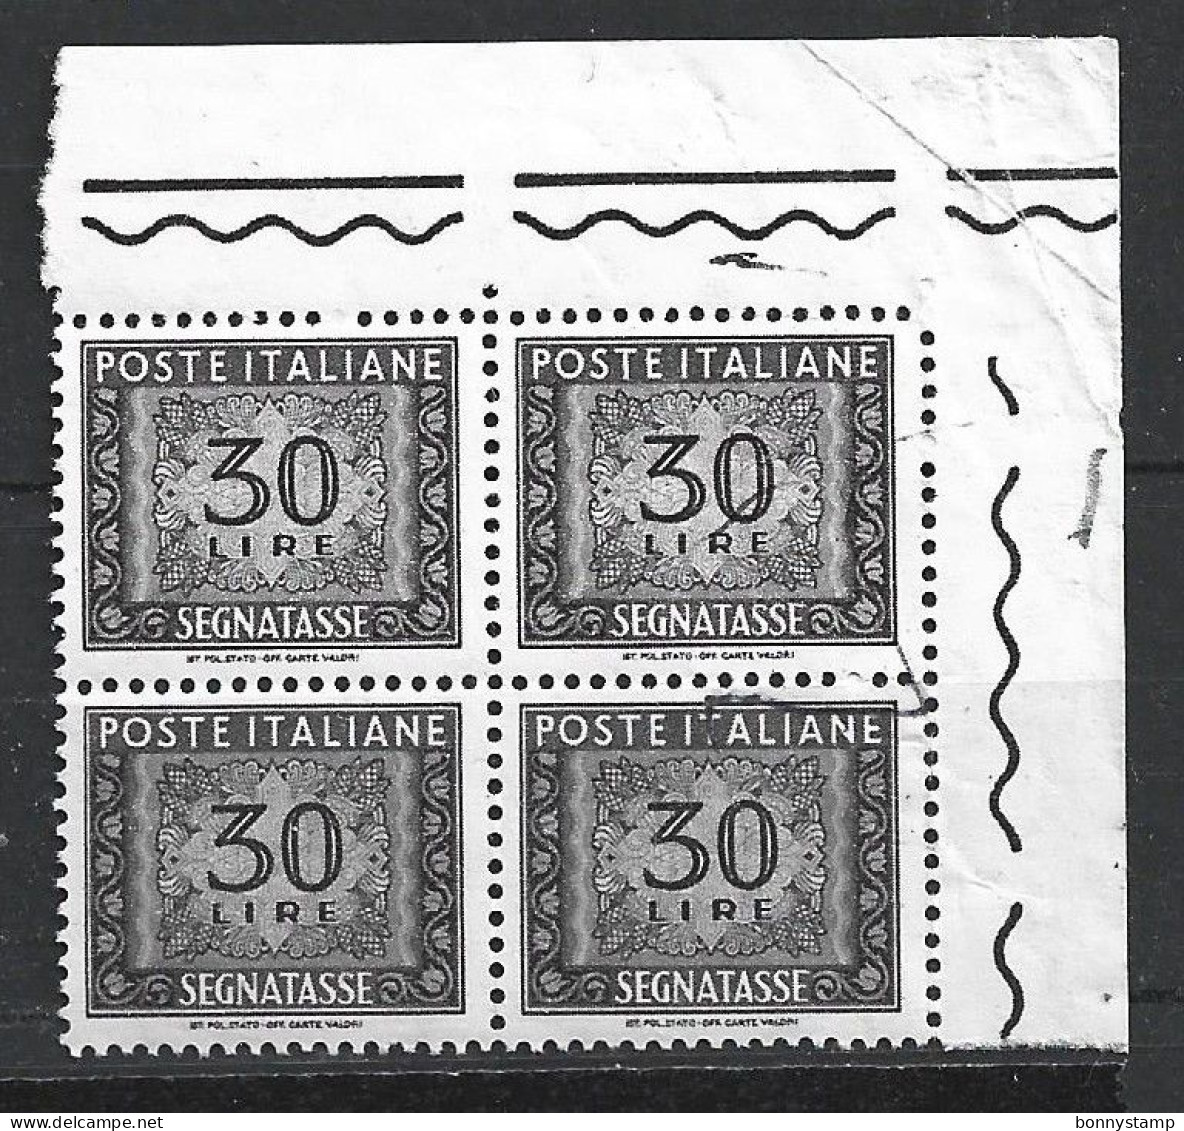 Repubblica Italiana, 1955/66 - 30 Lire Segnatasse, Fil. Stelle, Quartina - Nr.116 MNH** - Postage Due